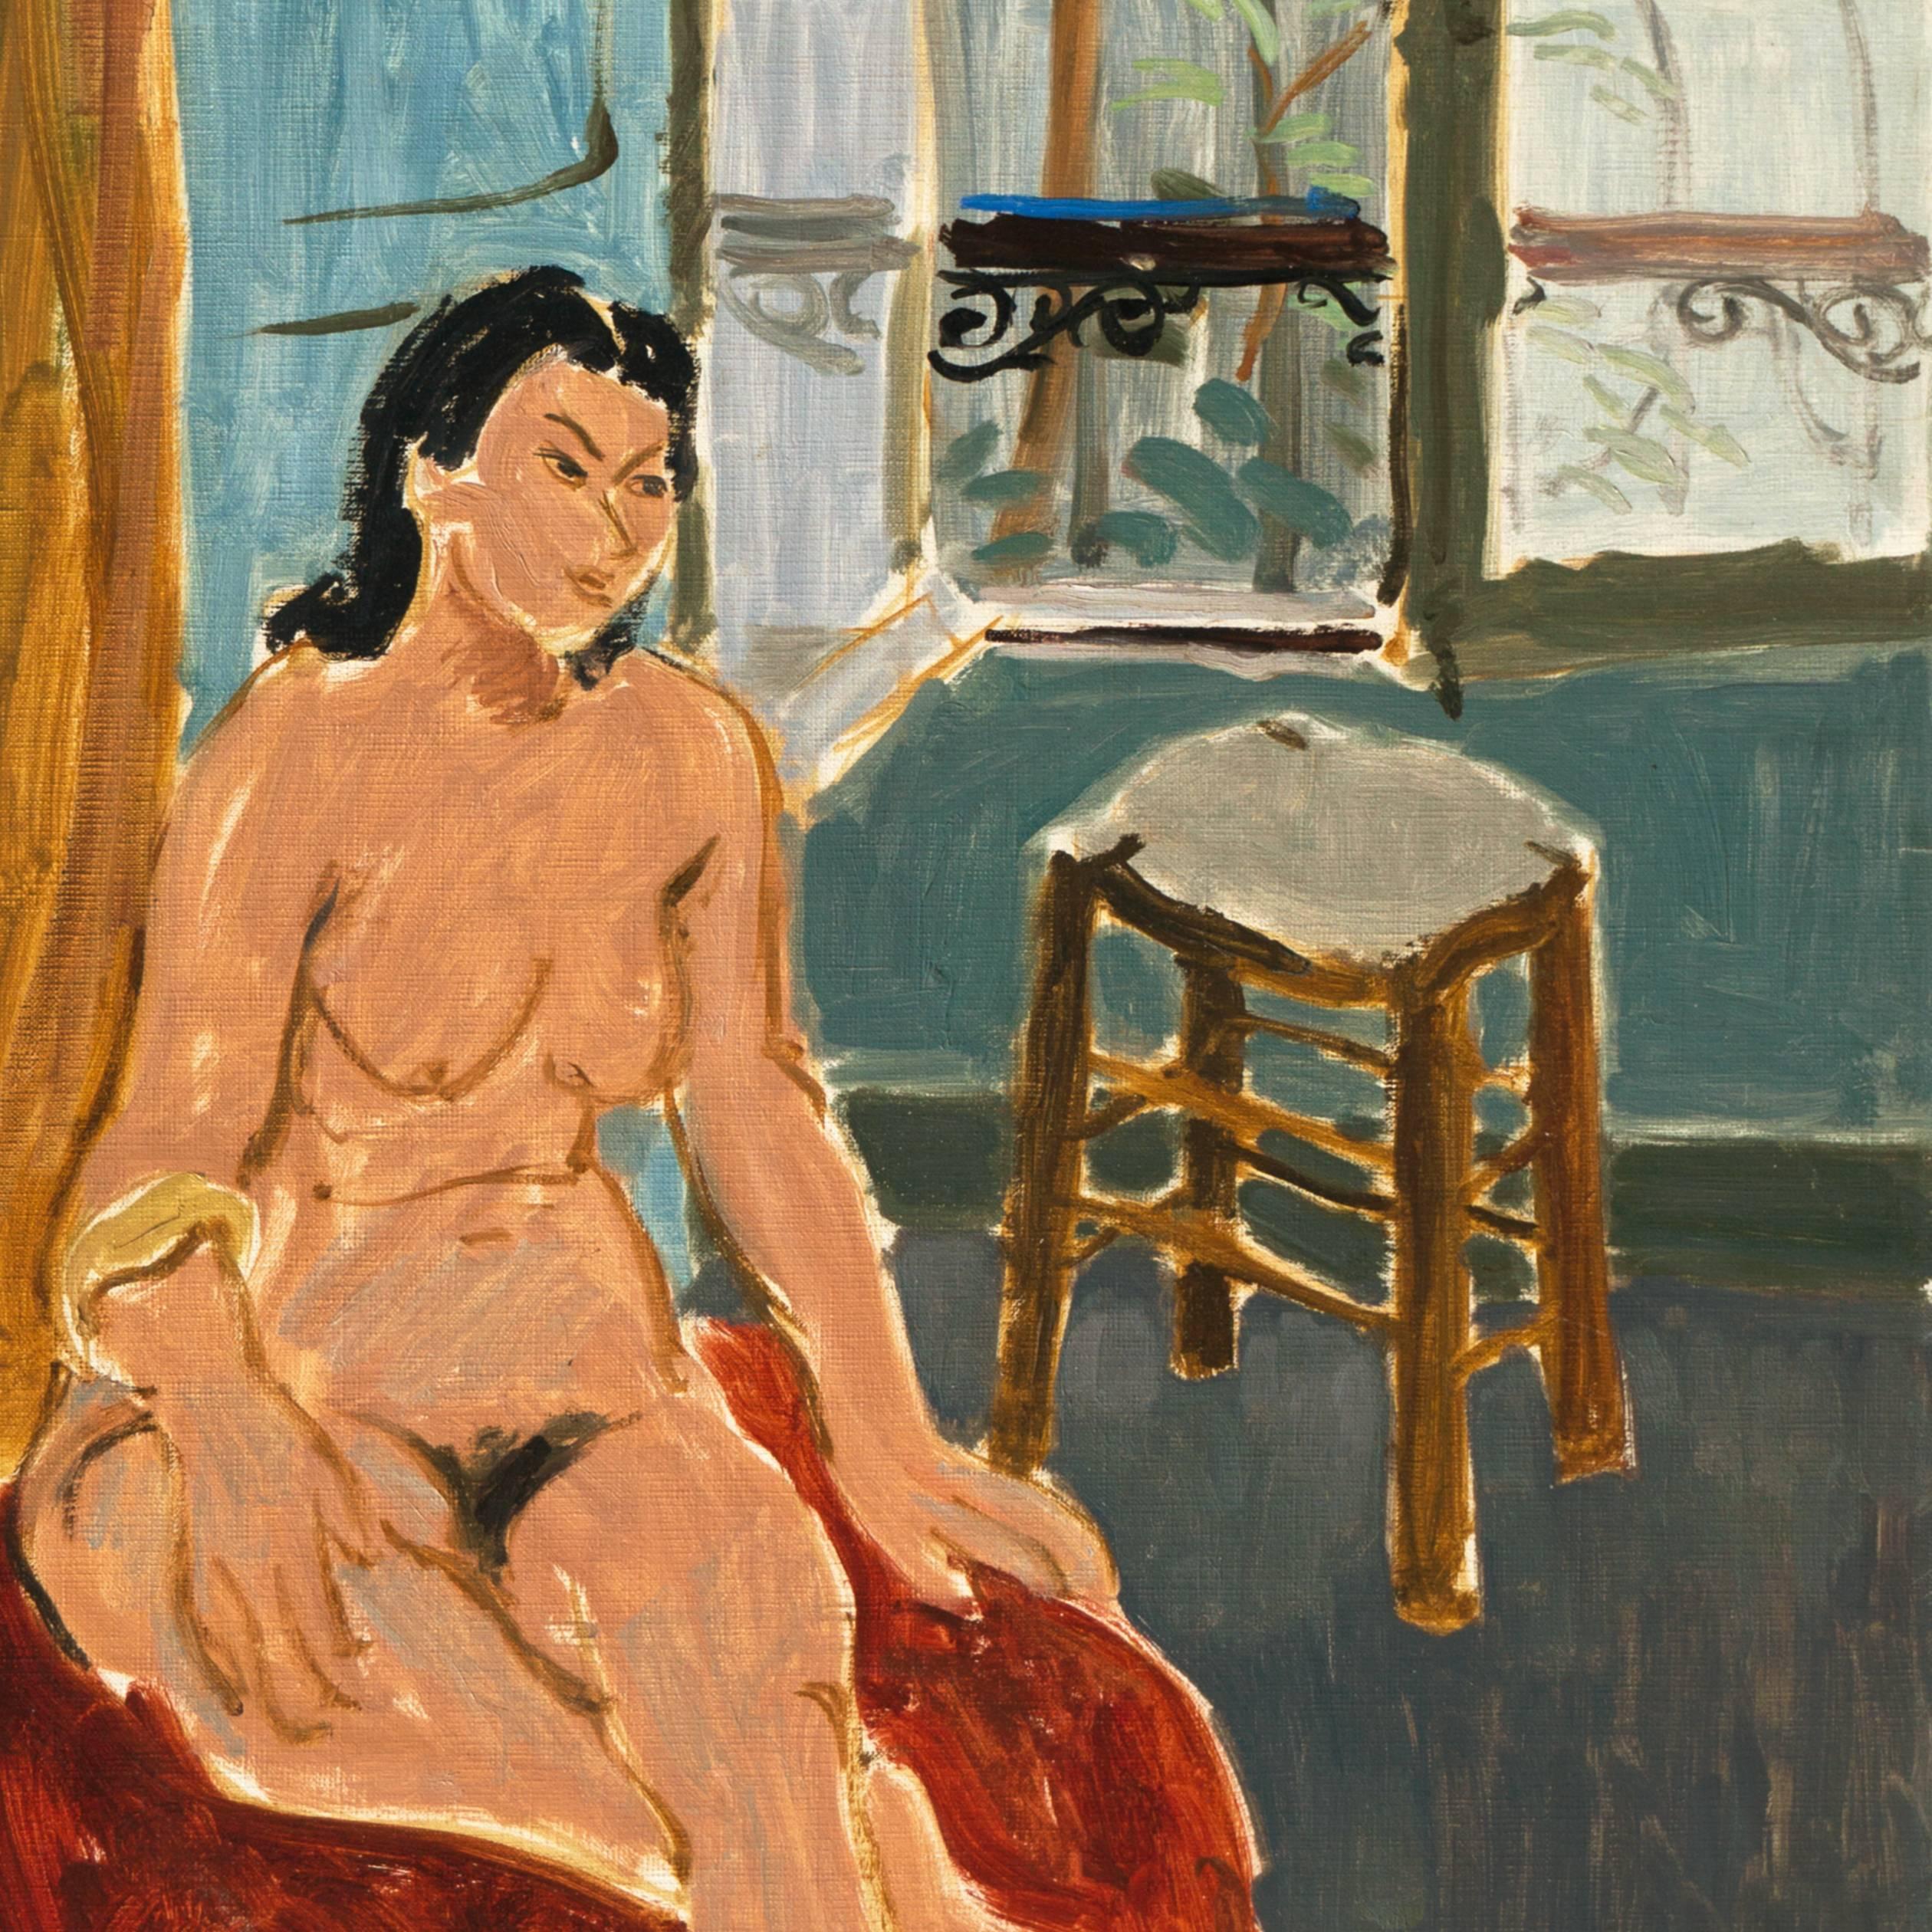 California Post-Impressionist 'Seated Nude', Louvre, Académie Chaumière, LACMA 1